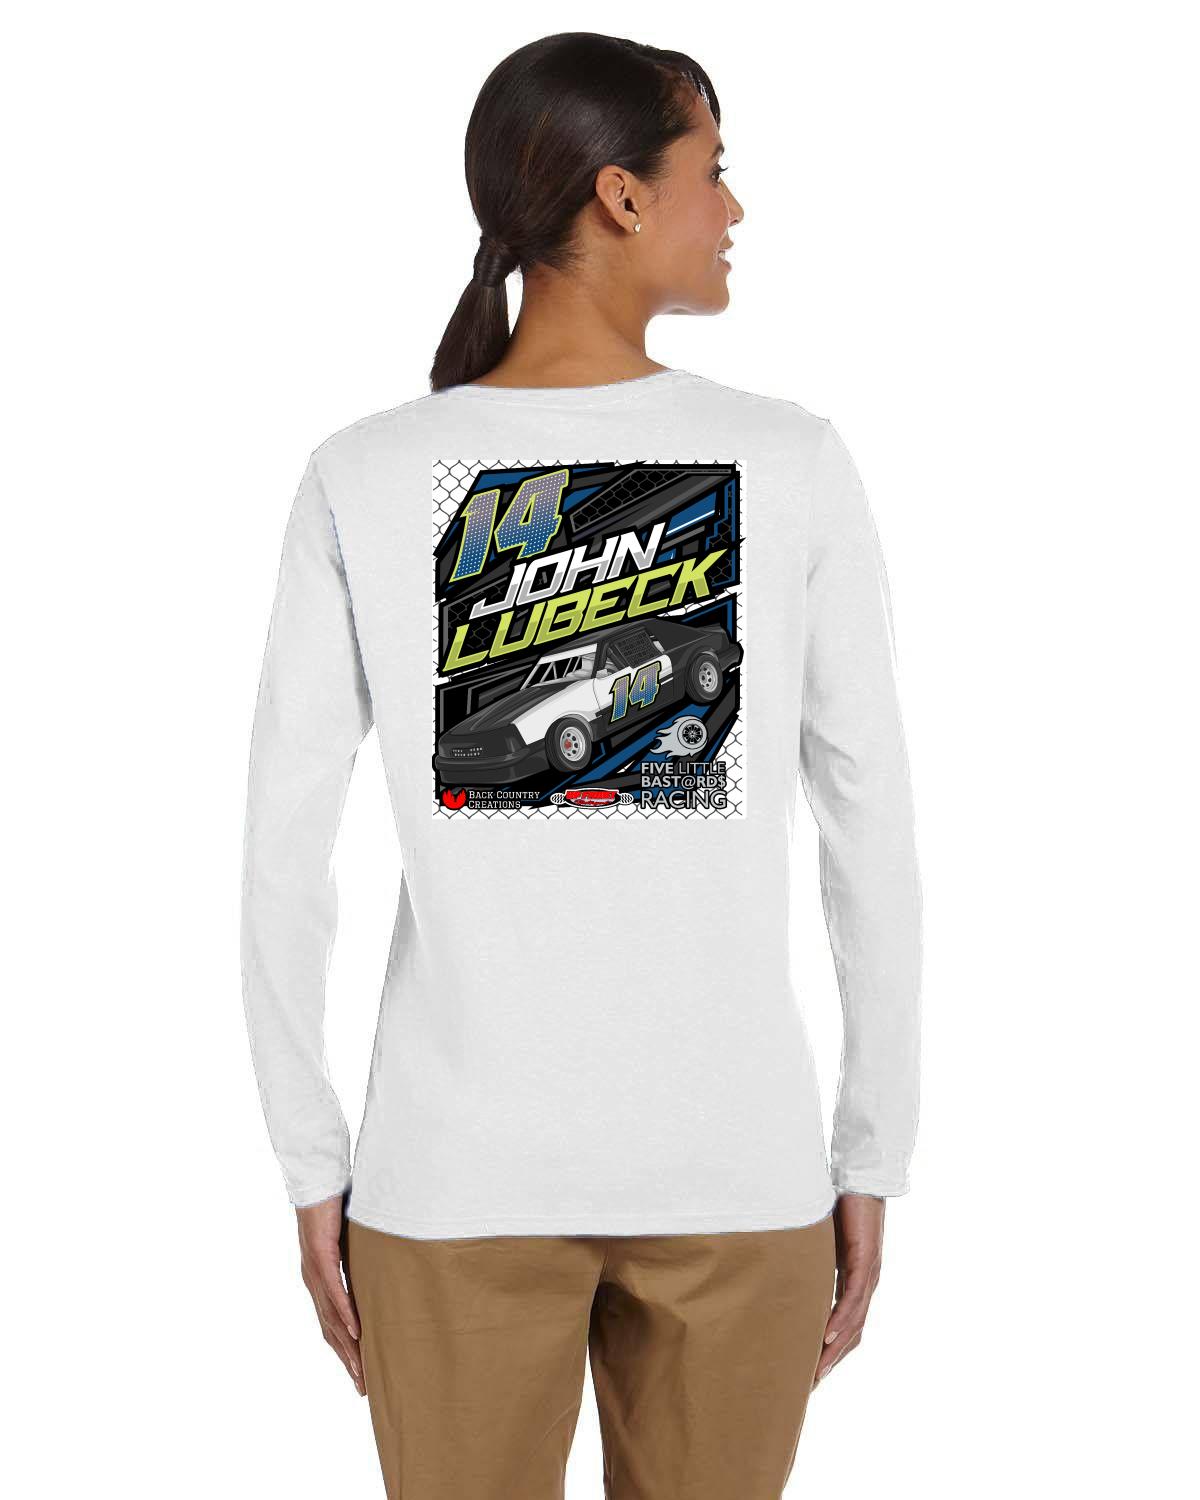 John Lubeck / Upfront Motorsports Ladies' Long-Sleeve T-Shirt